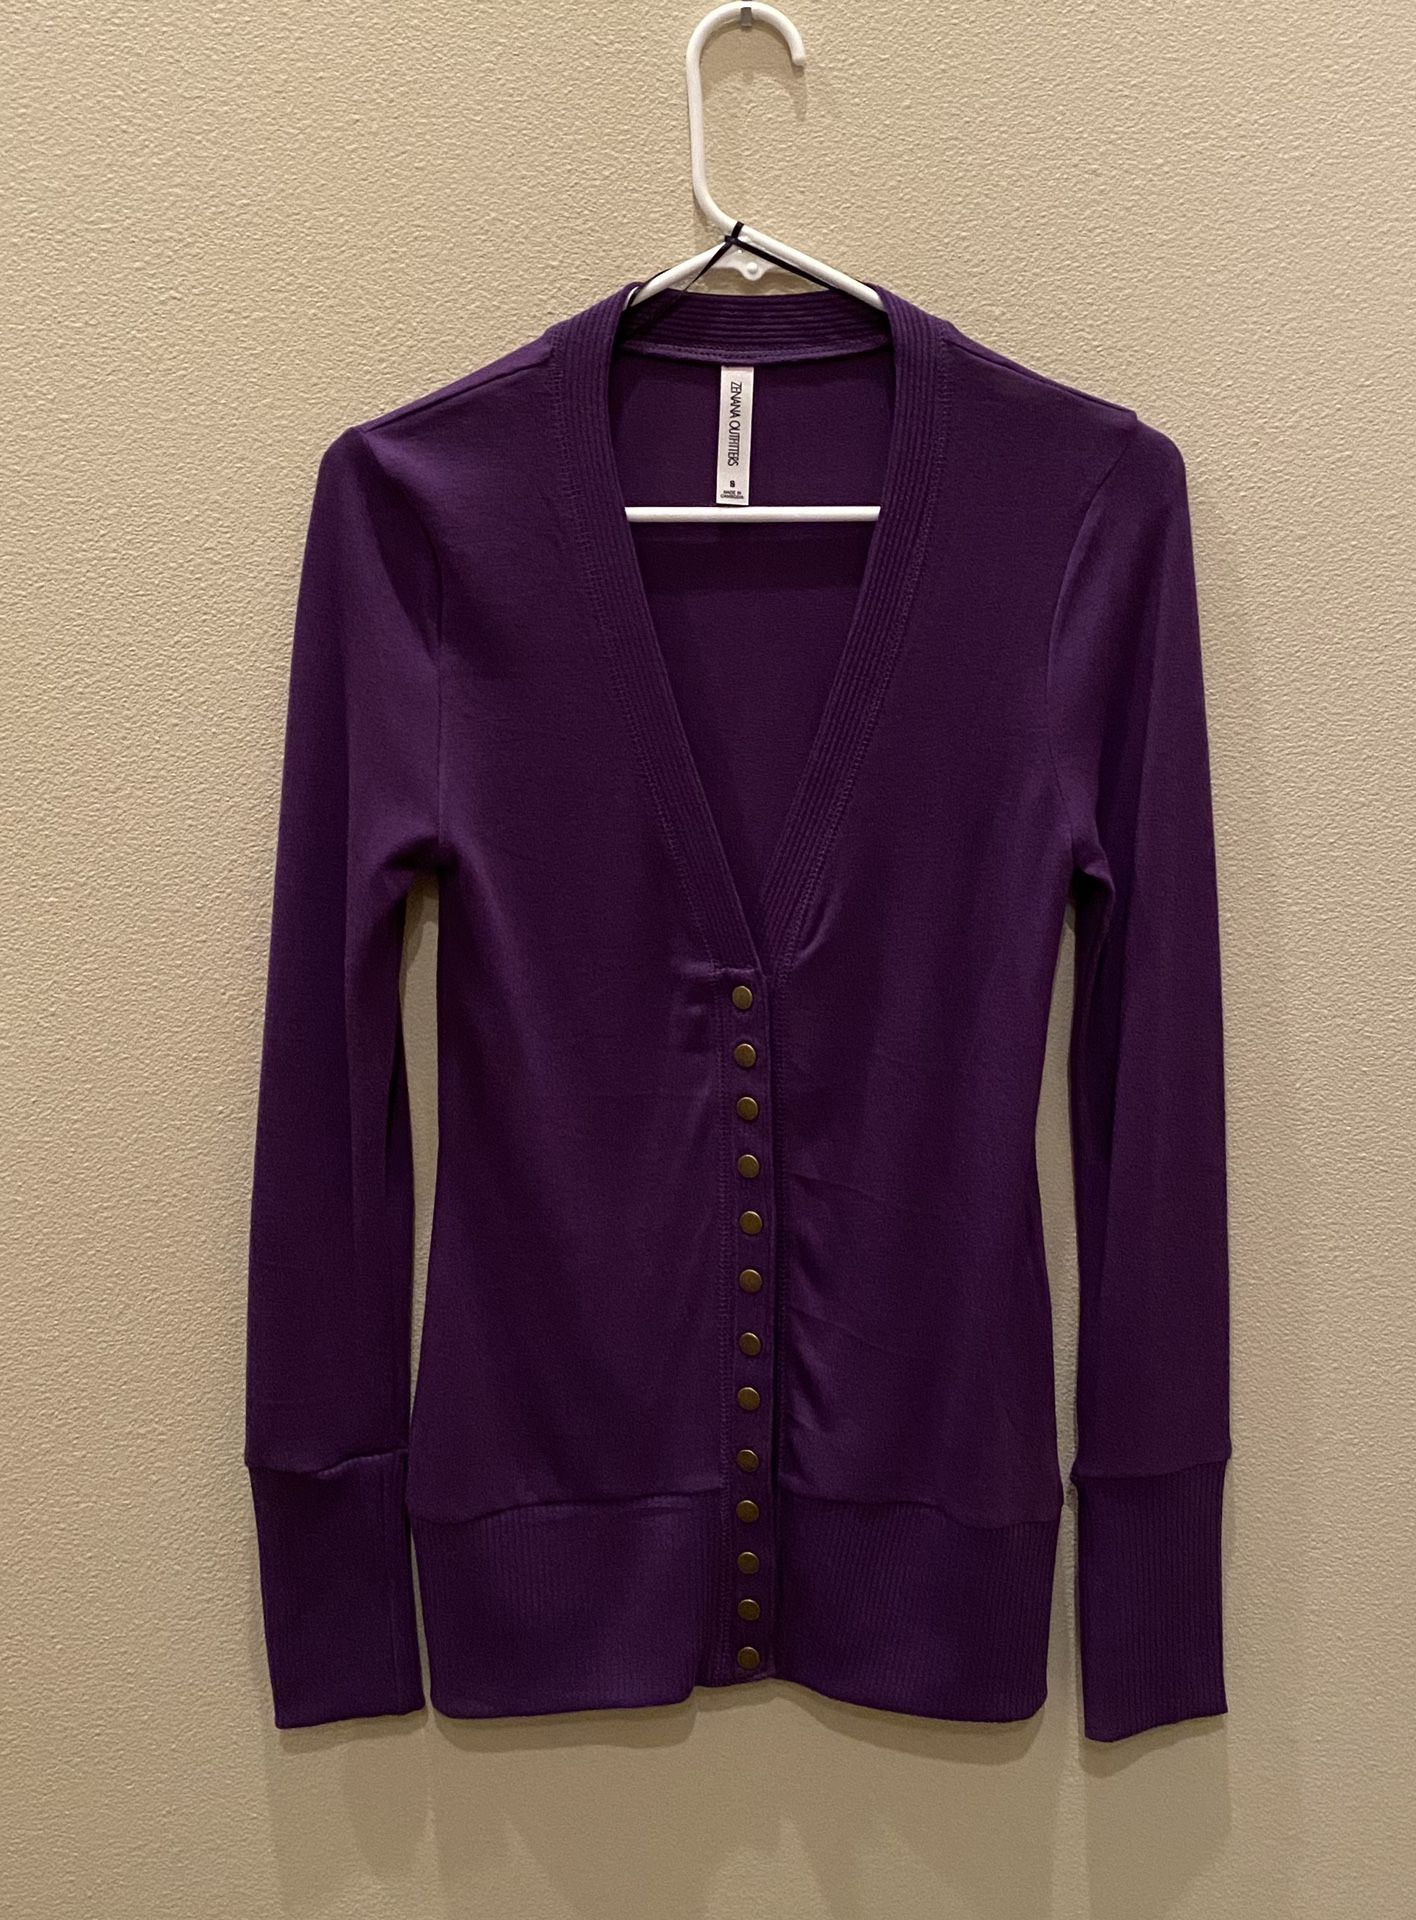 NWOT~ Women’s Purple Cardigan, Sz Small